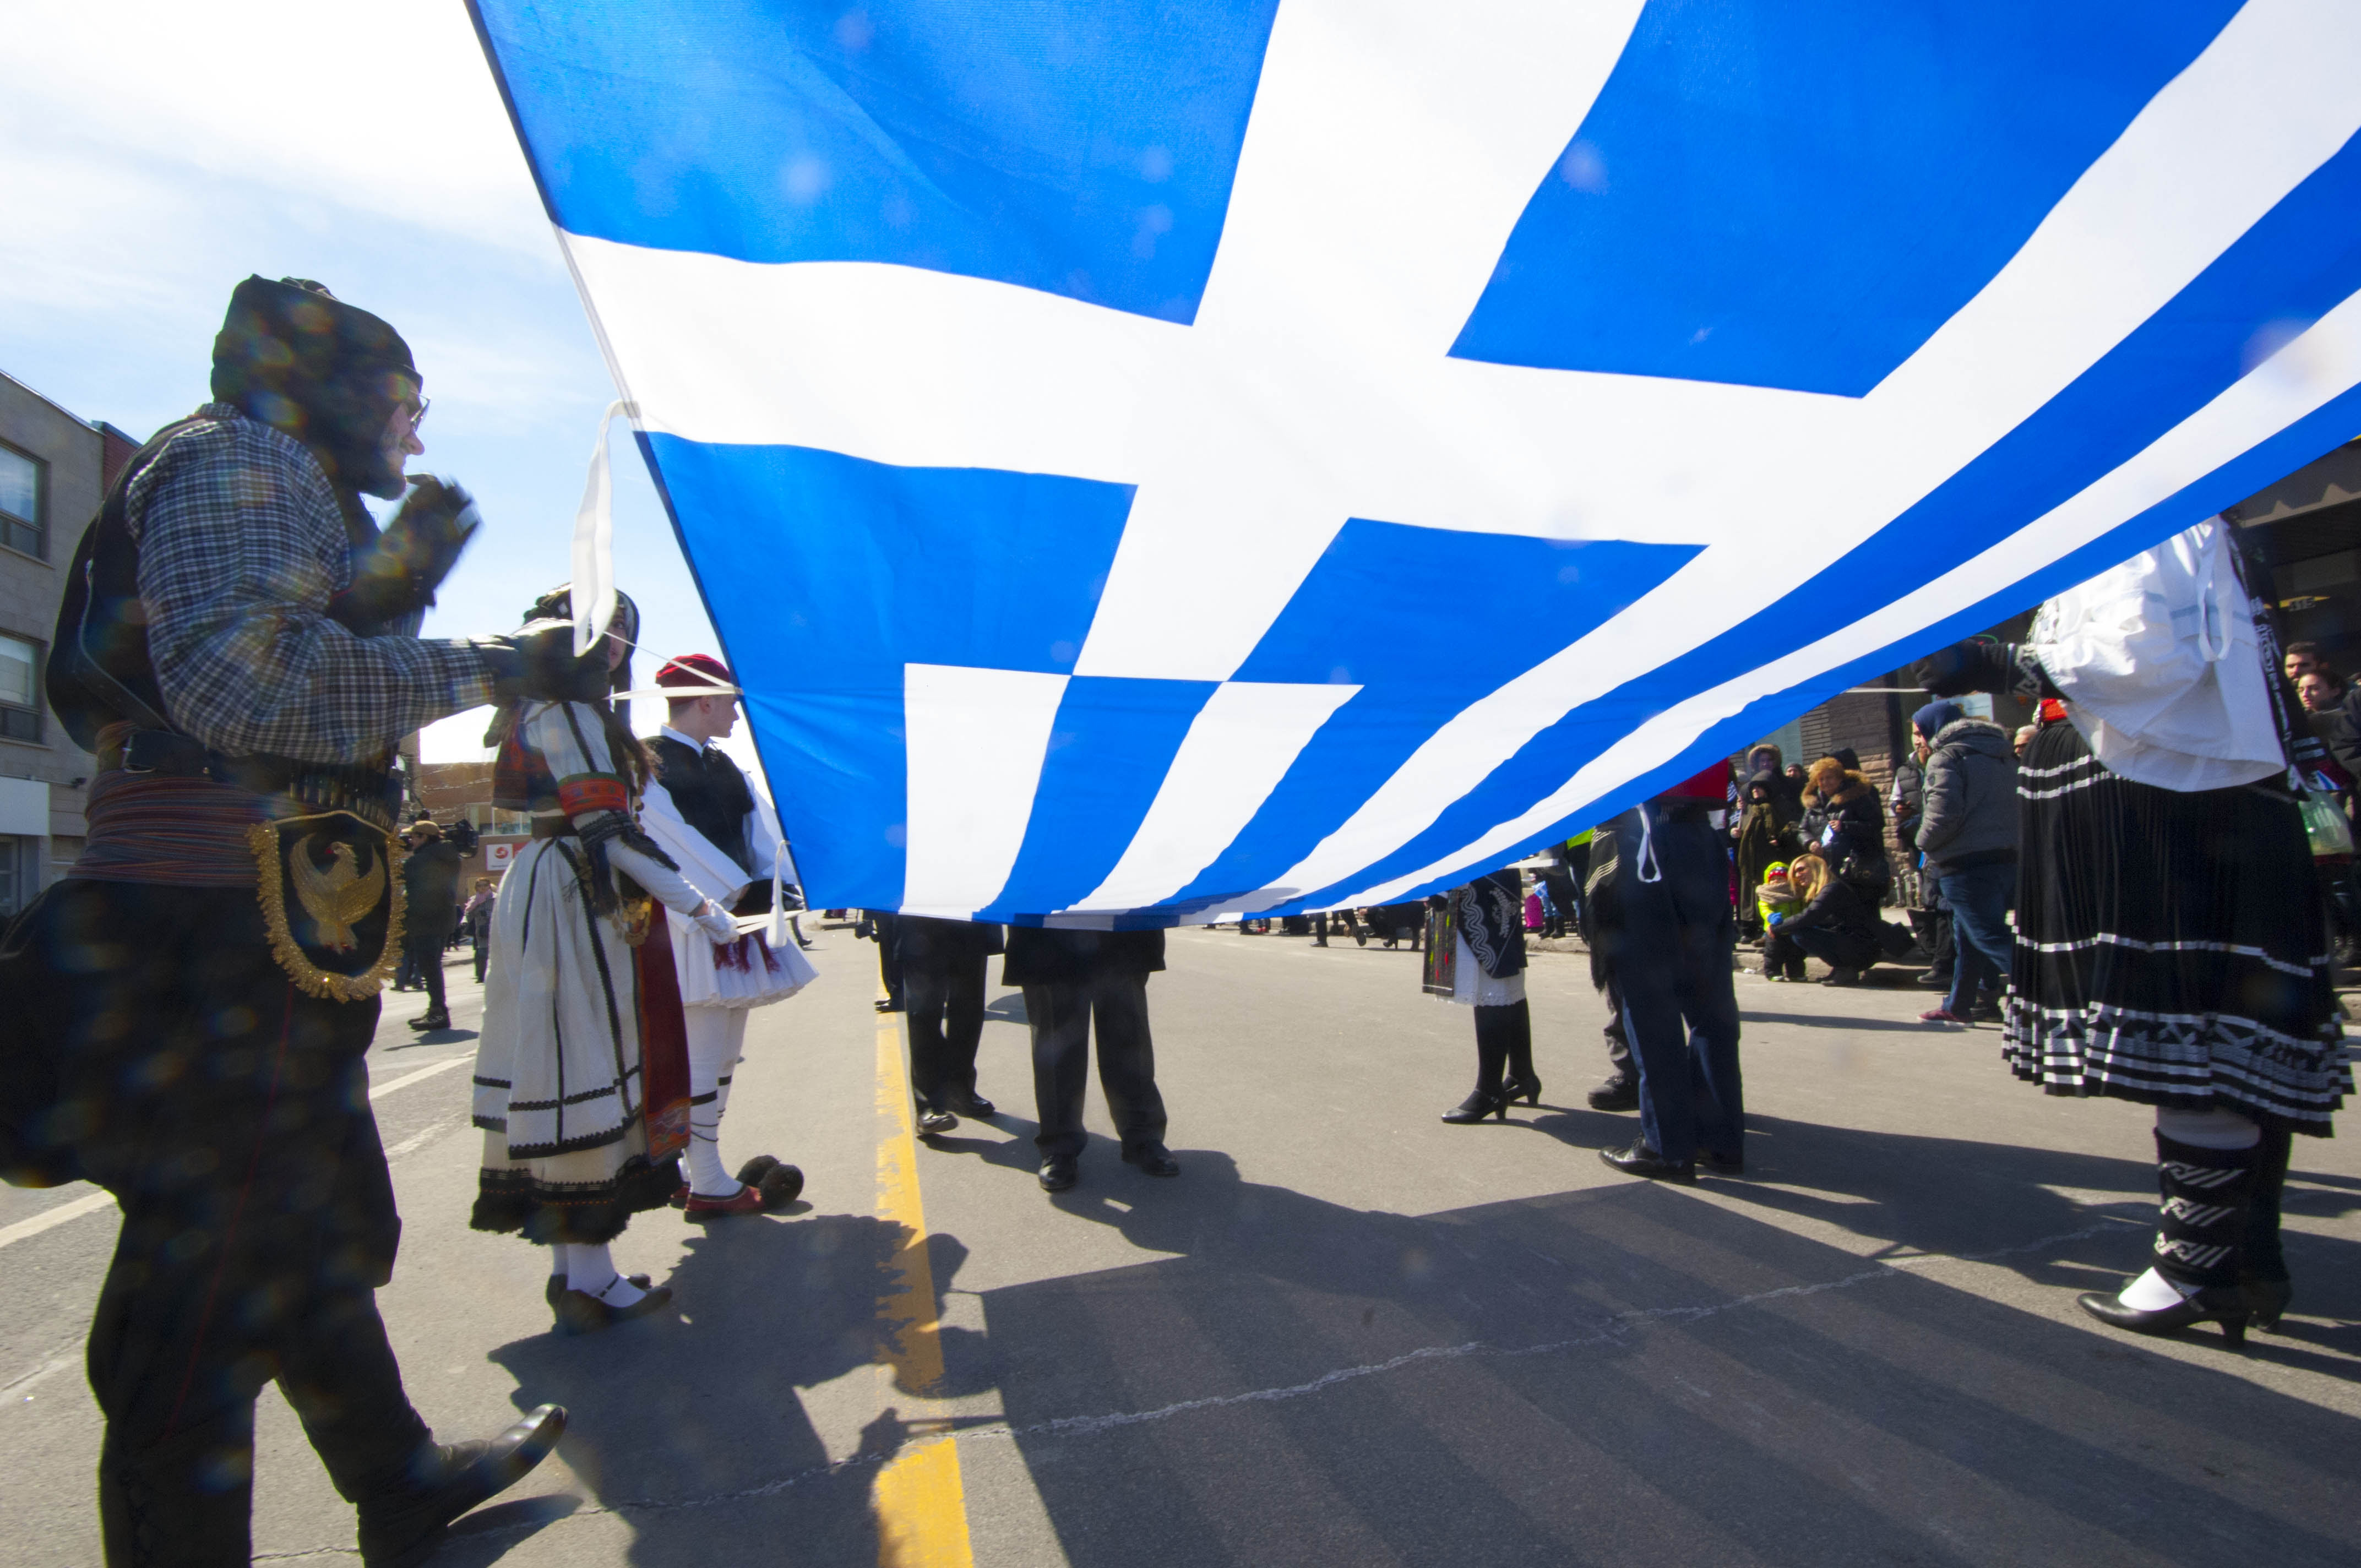 Celebration of the Greek National Holiday